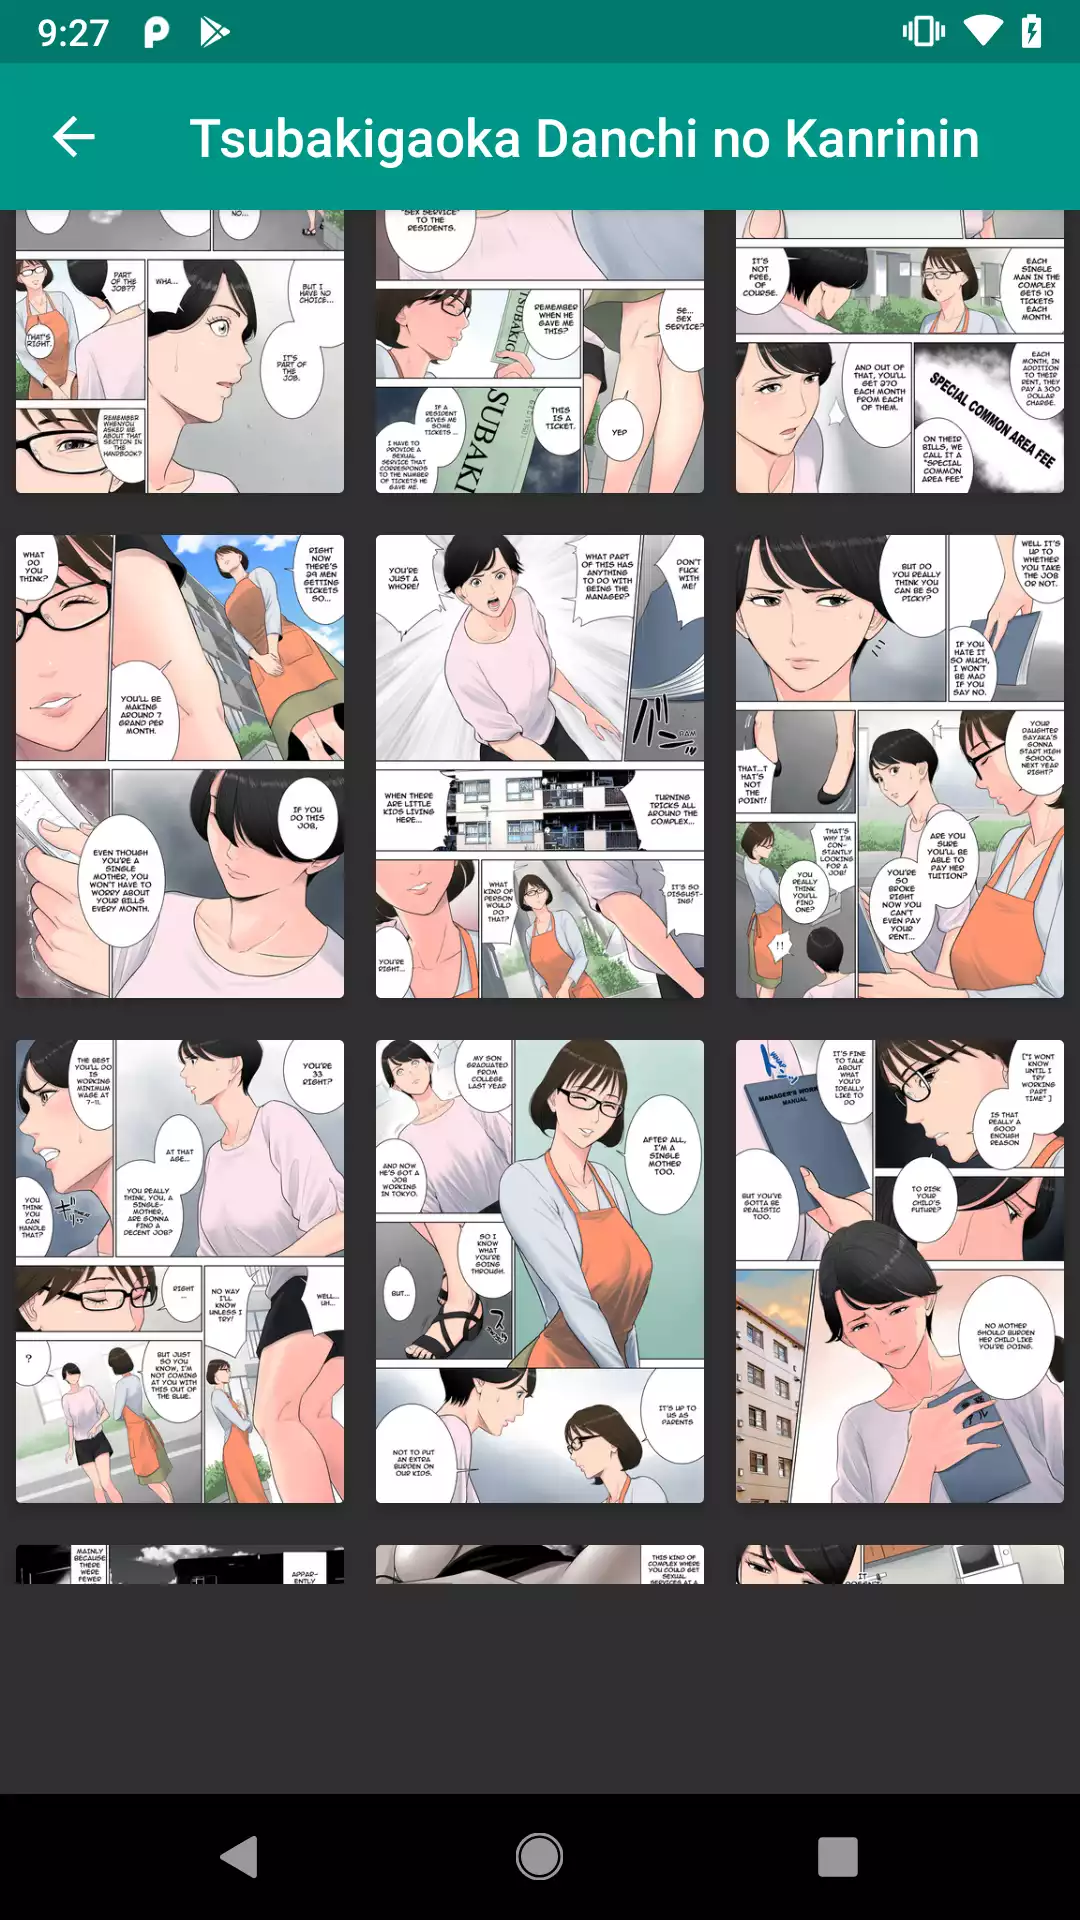 Tsubakigaoka Danchi no Kanrinin apk,hentai,game,futanari,wallpapers,photos,sexy,apps,wallpaper,comics,pics,android,porn,adult,comic,collection,app,hentie,puzzle,hot,download